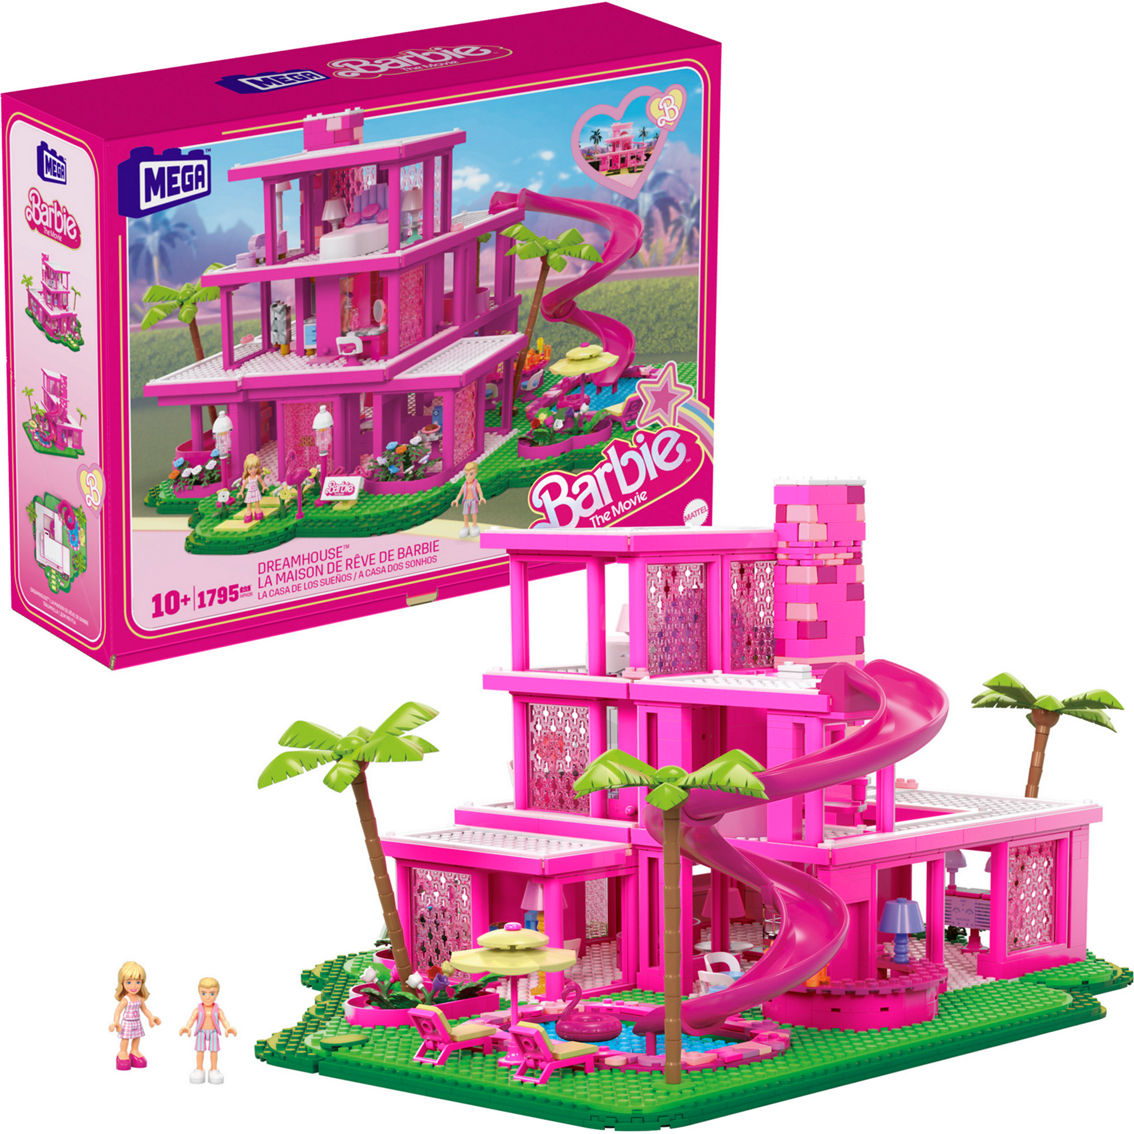 Mattel MEGA Barbie DreamHouse - Image 2 of 6